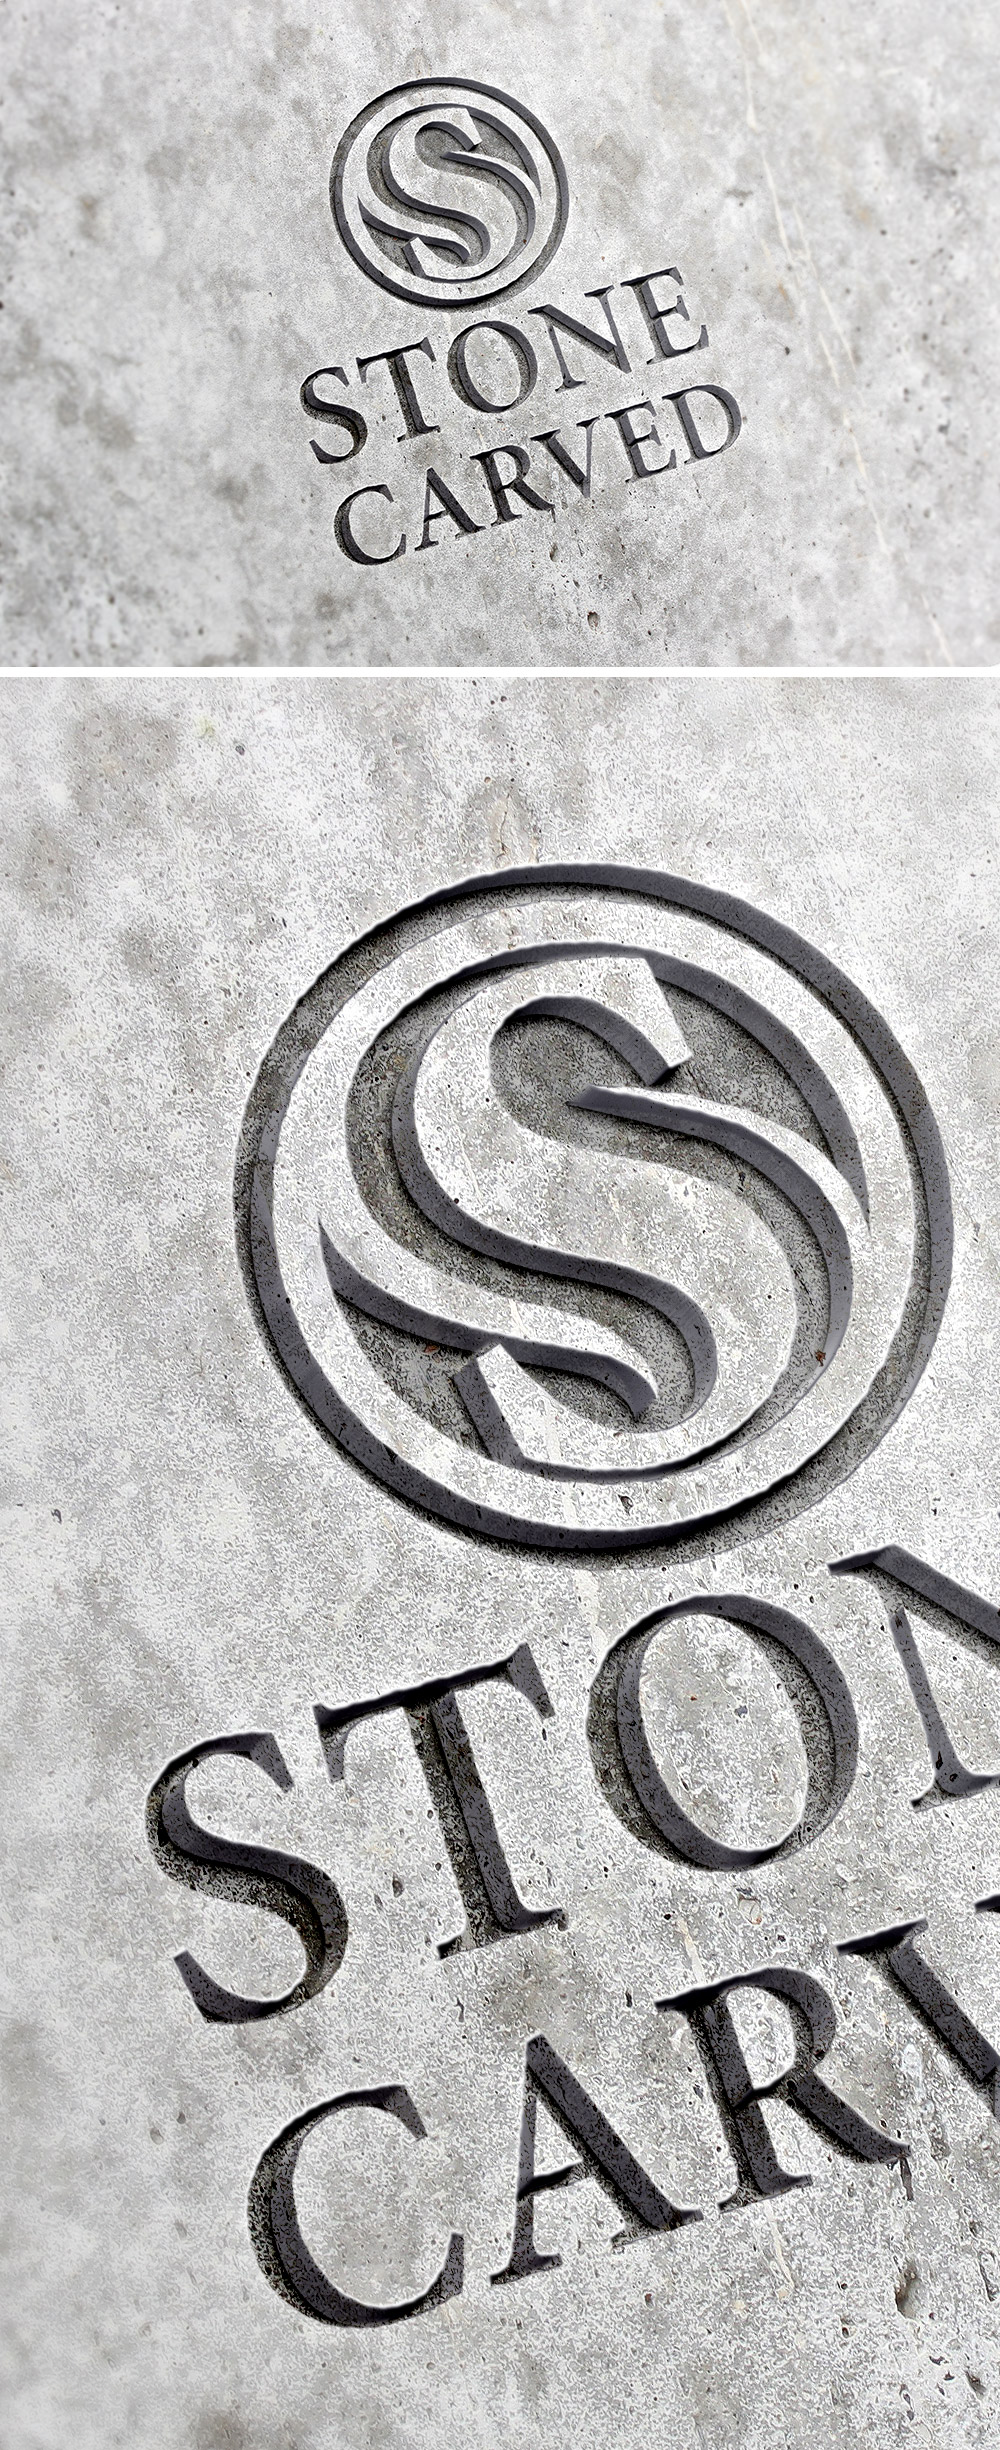 Carved Stone Logo Mockup PSD Free Download